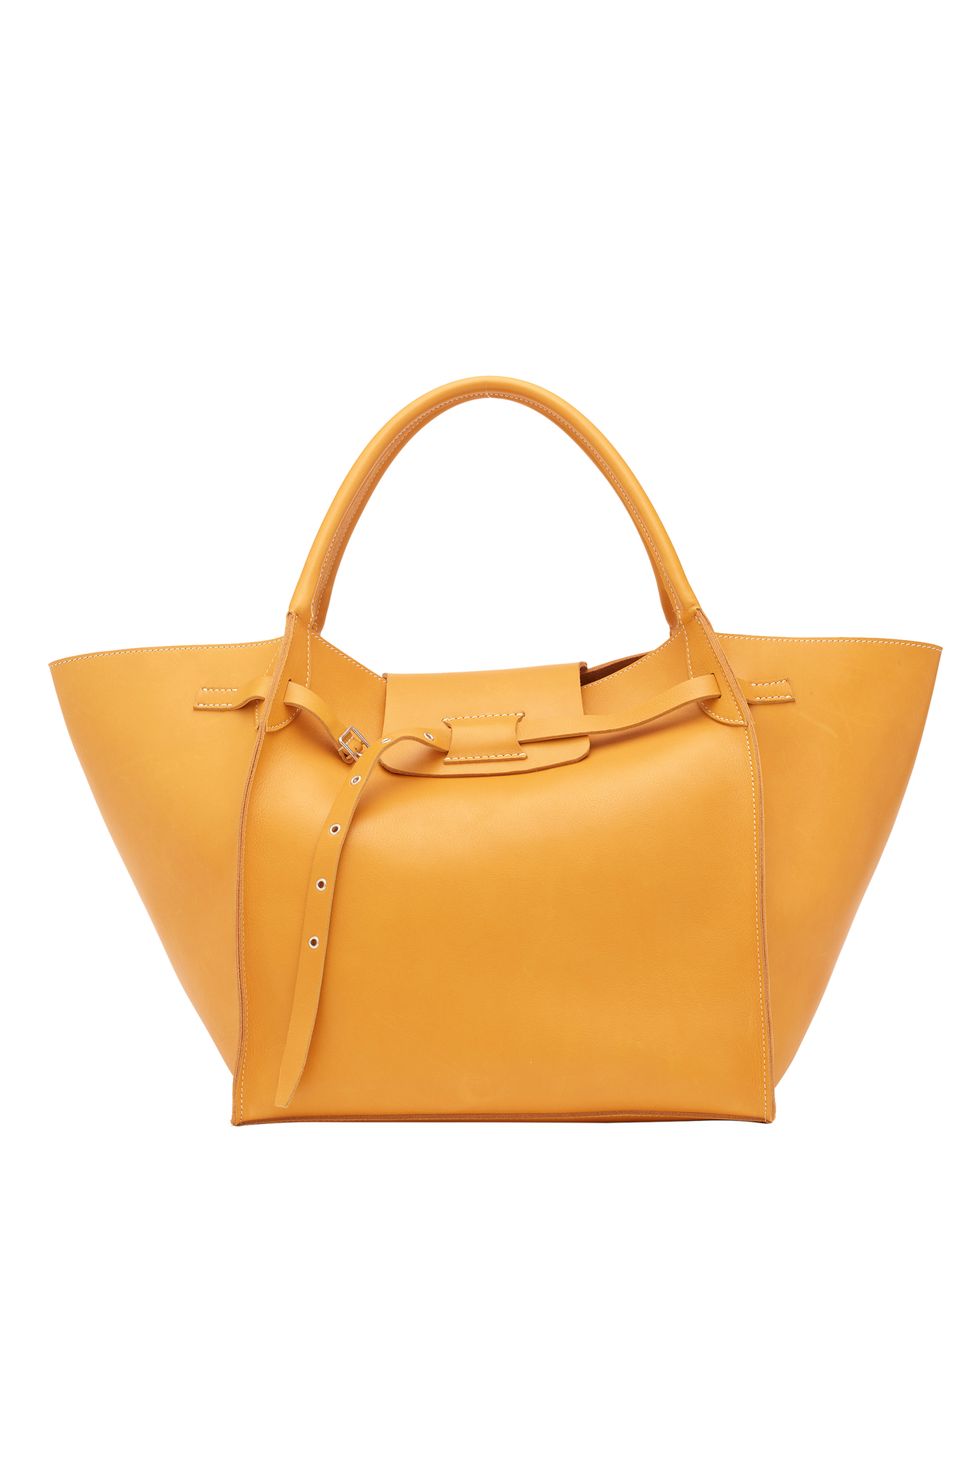 Handbag, Bag, Yellow, Orange, Fashion accessory, Leather, Shoulder bag, Tan, Tote bag, Beige, 